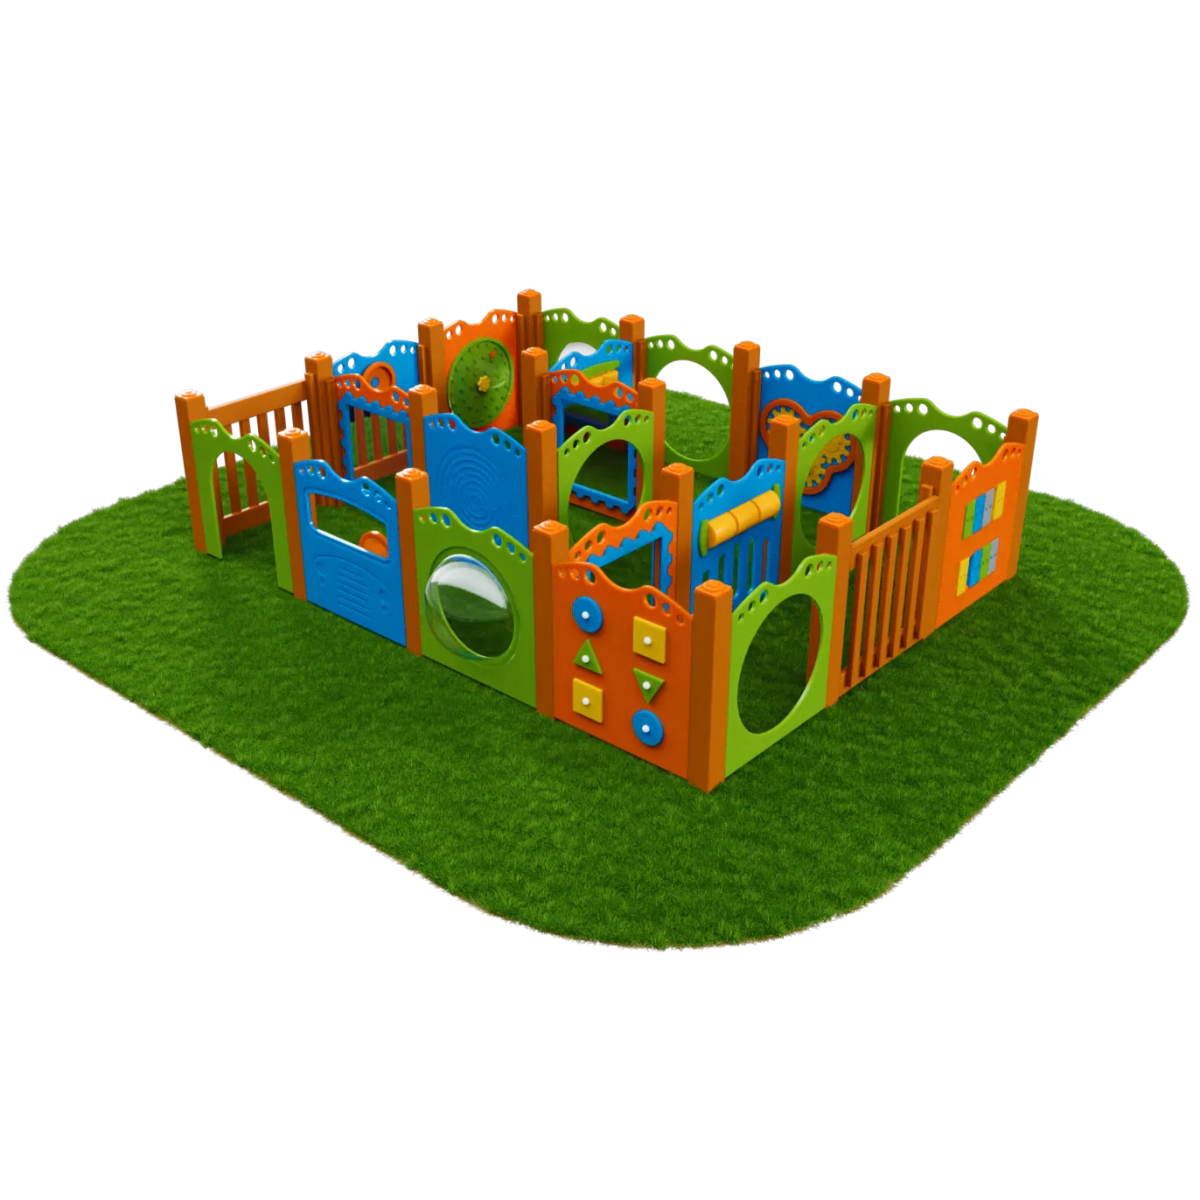 Maze Marvel Playset - Toddler Playgrounds - Playtopia, Inc.